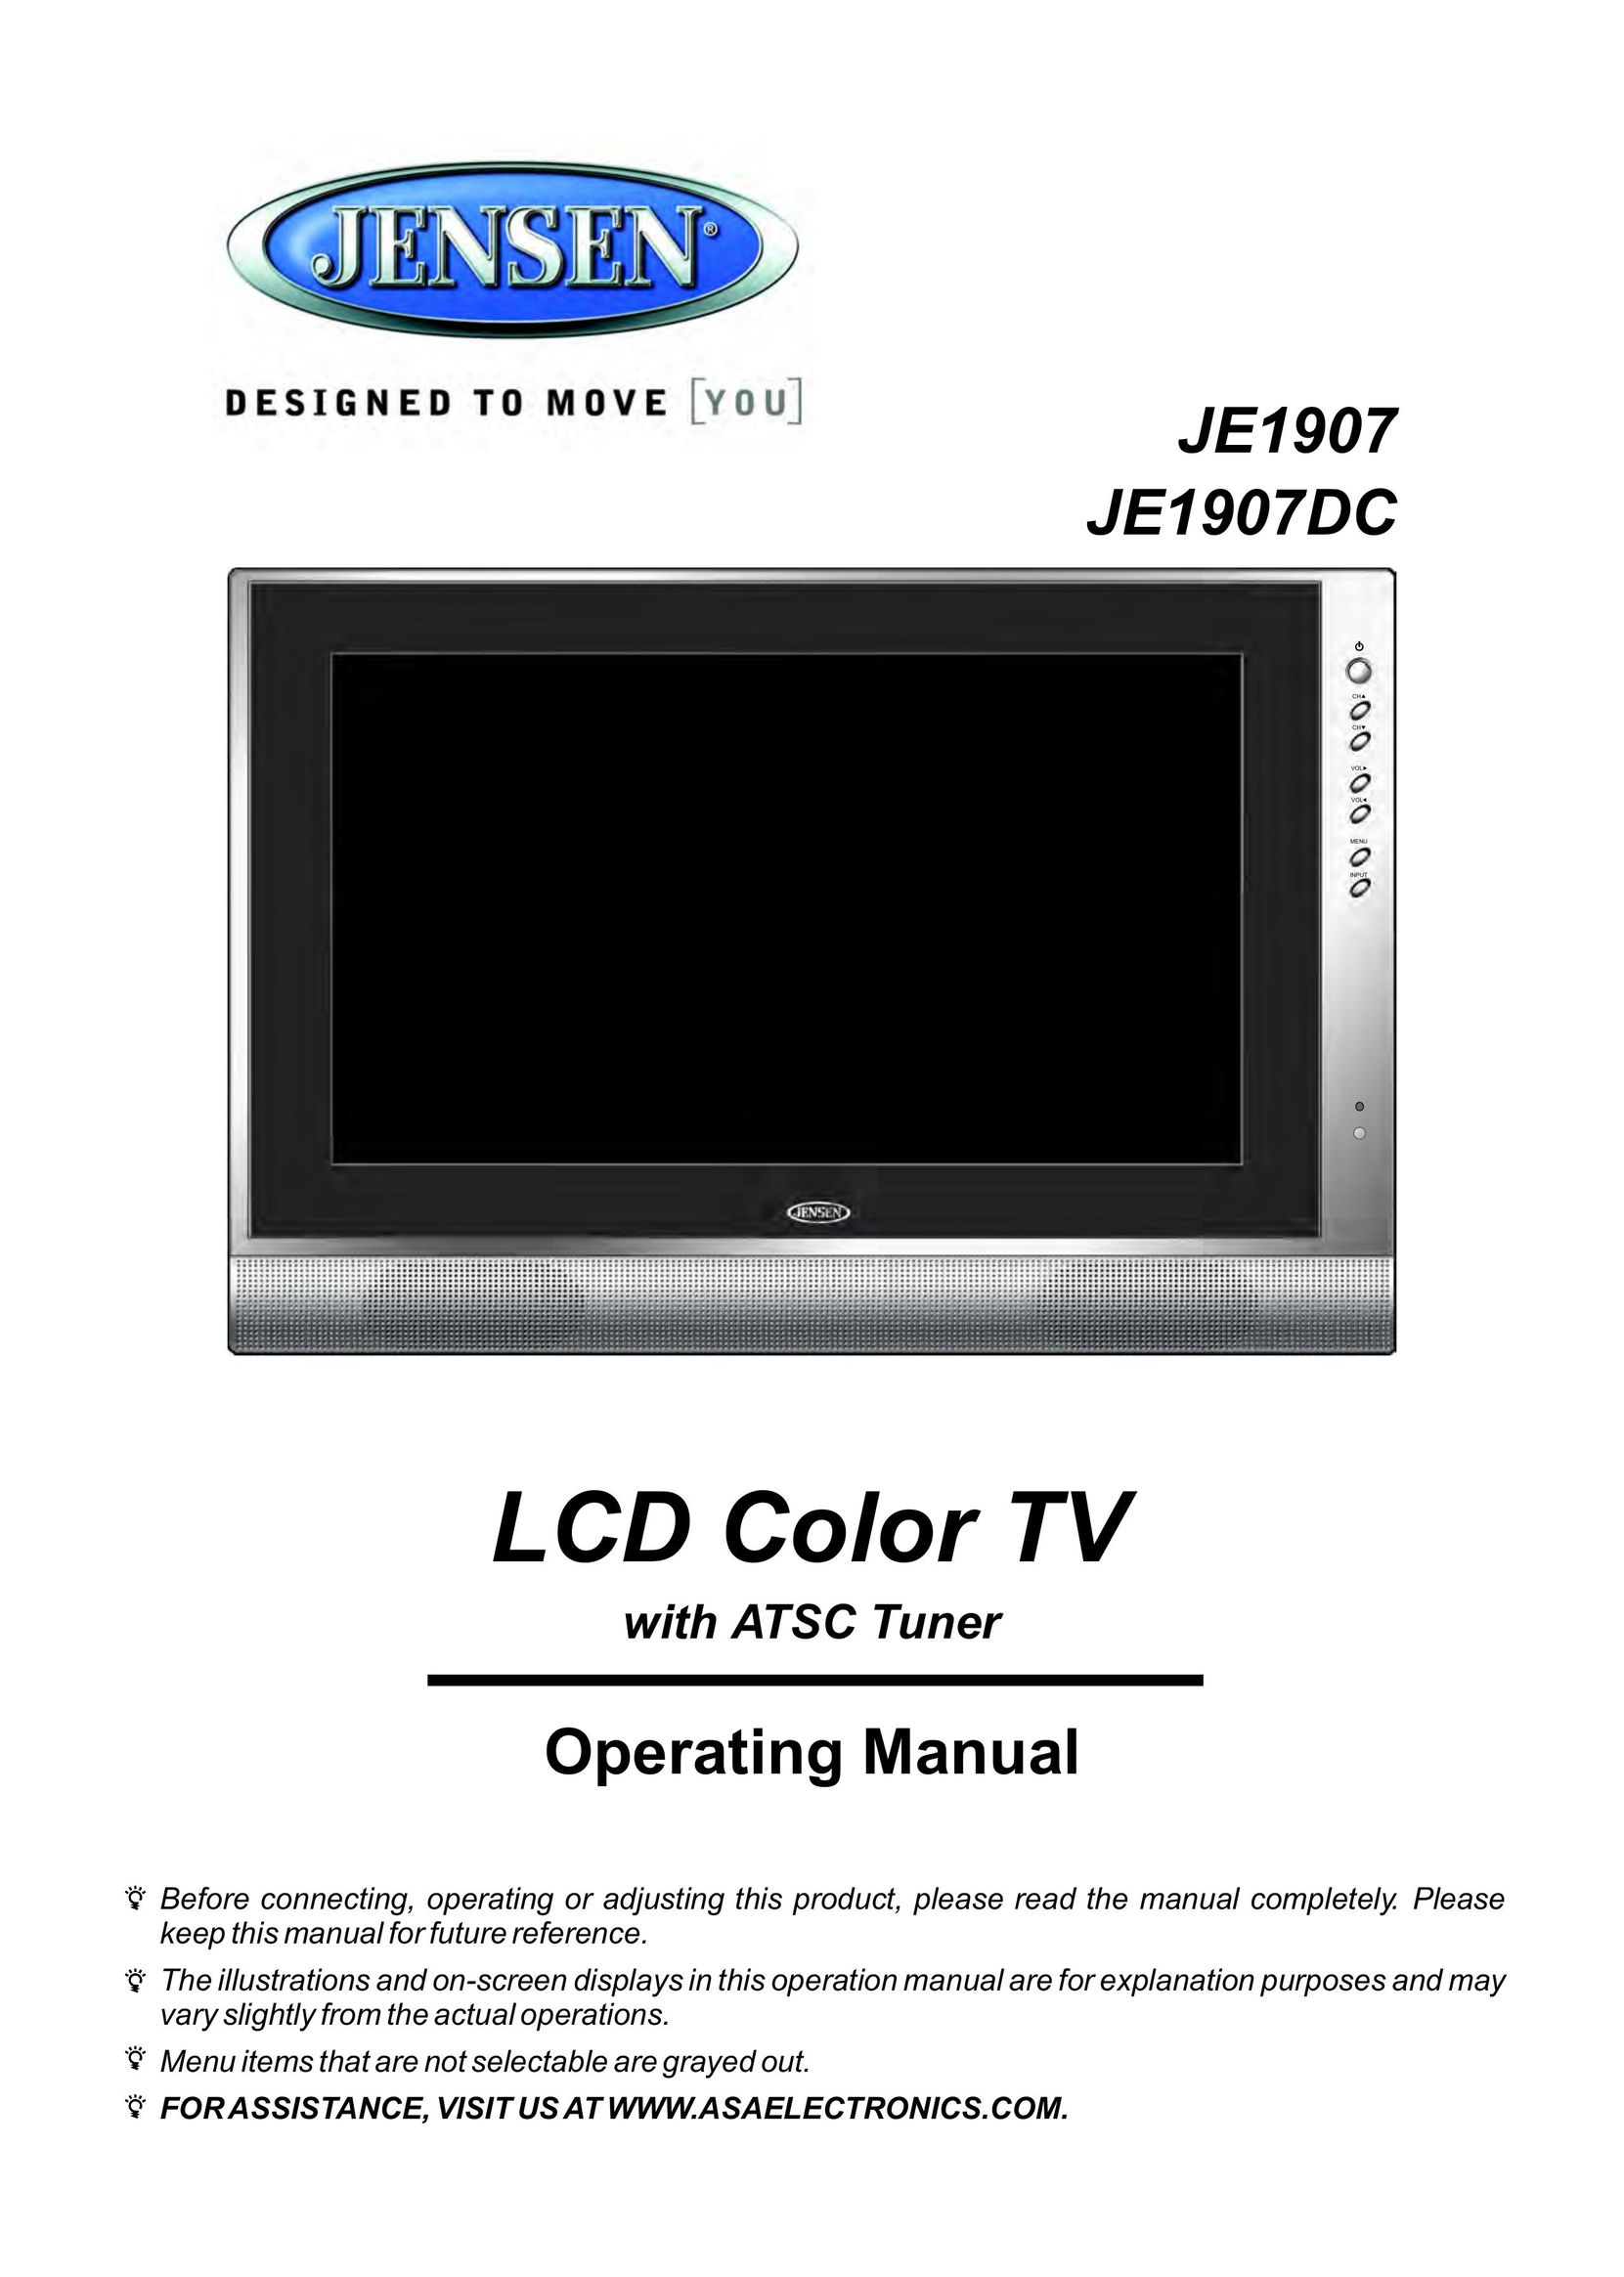 Jensen JE1907 Flat Panel Television User Manual